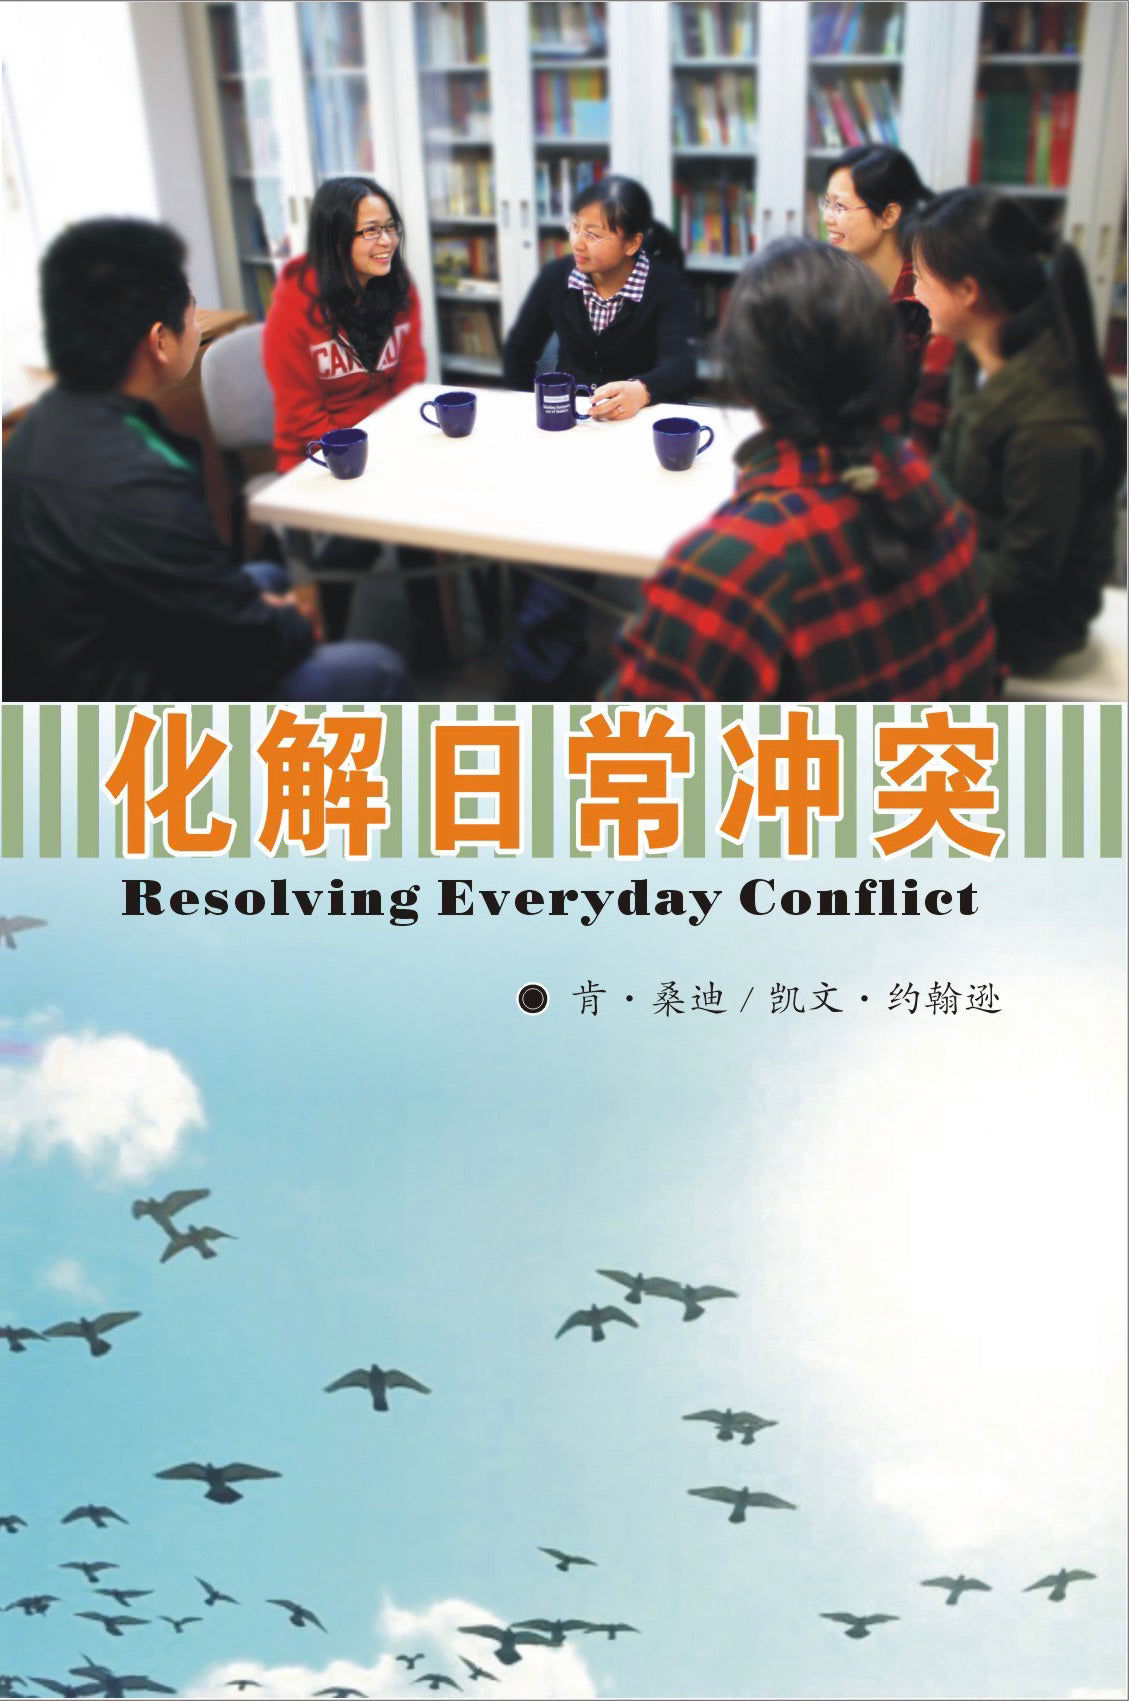 《化解日常衝突》(电子版书籍, 简体字版）Resolving Everyday Conflict (e-book, simplified Chinese characters)